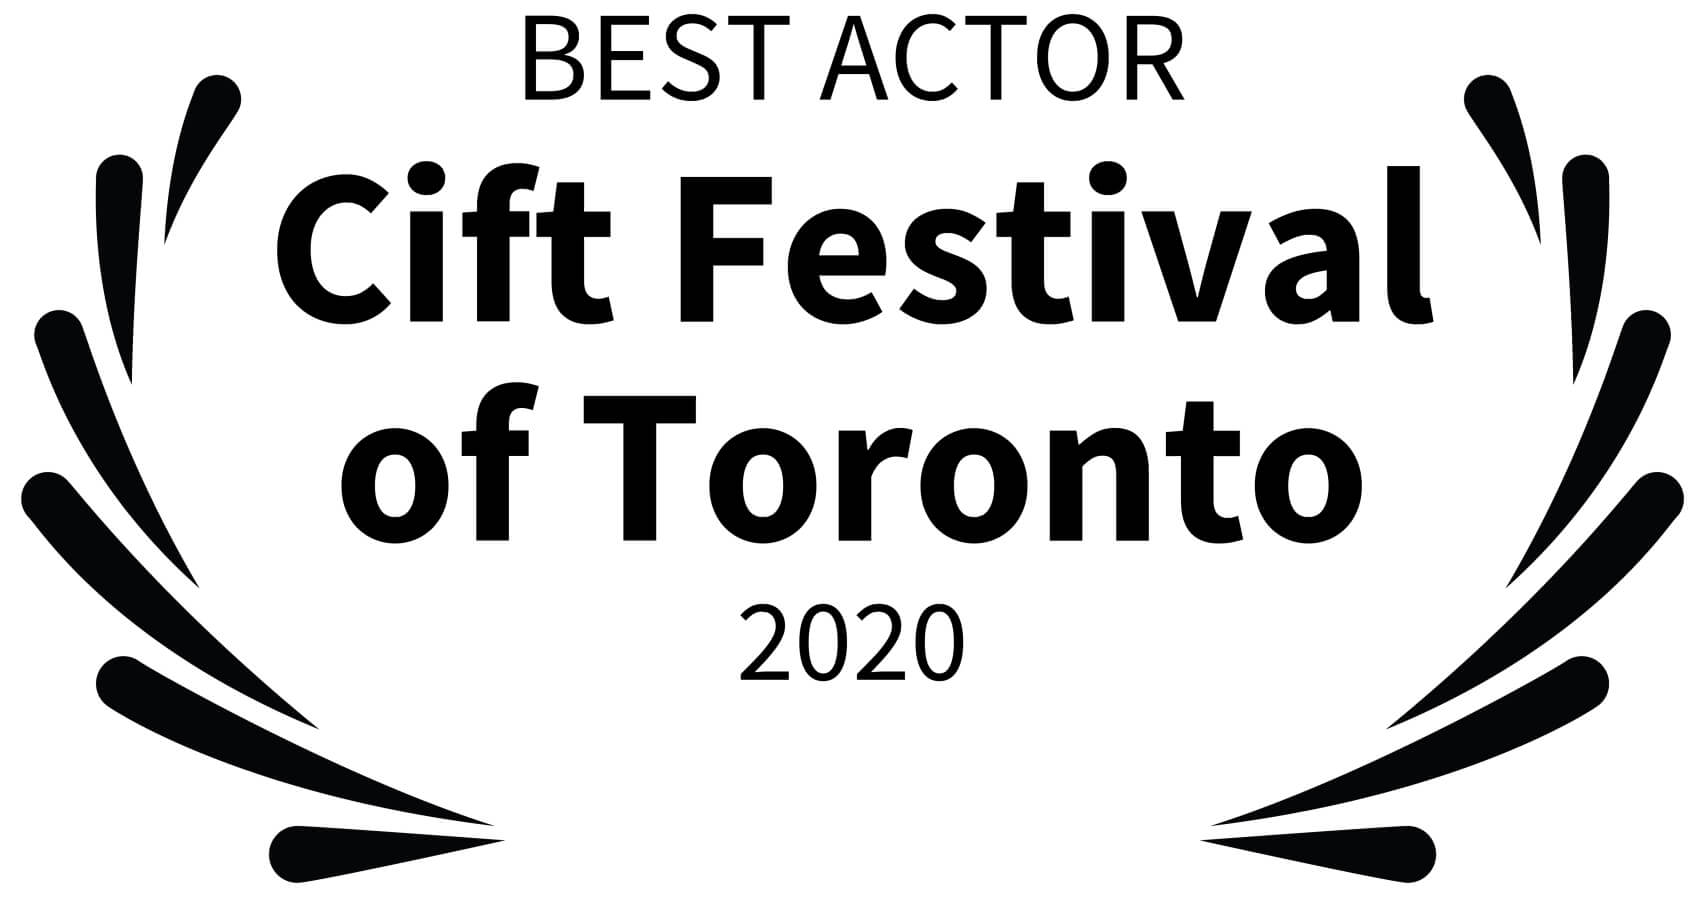 BEST ACTOR - Cift Festival of Toronto 2020